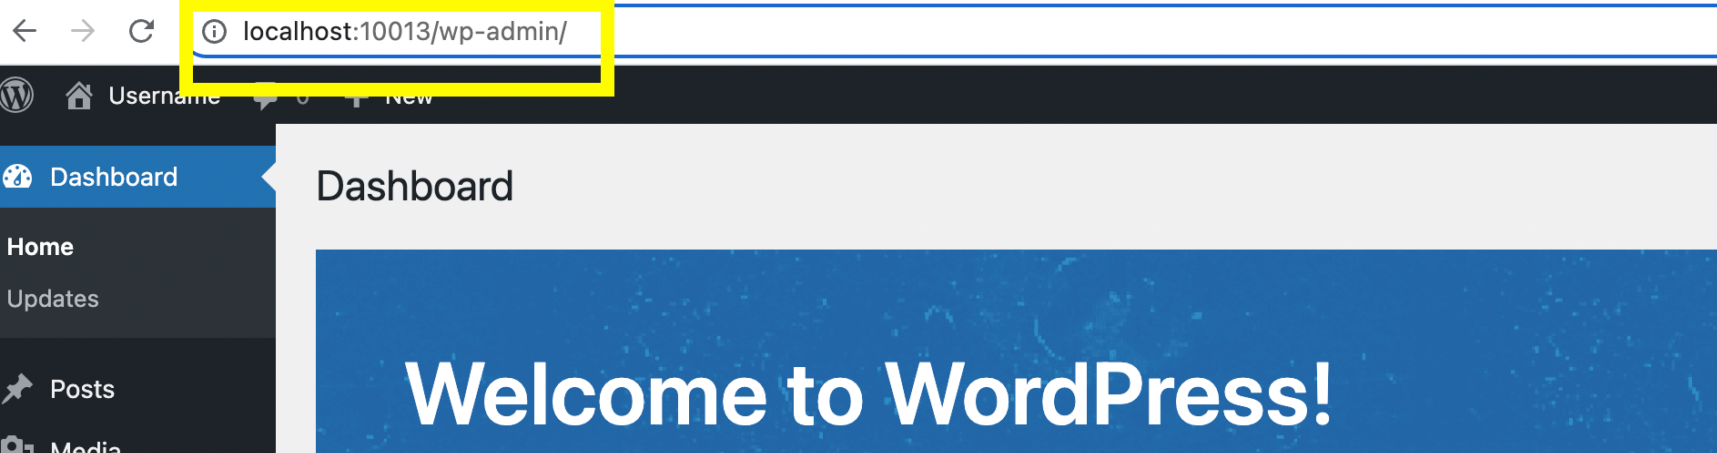 Localhost URL screenshot in WordPress